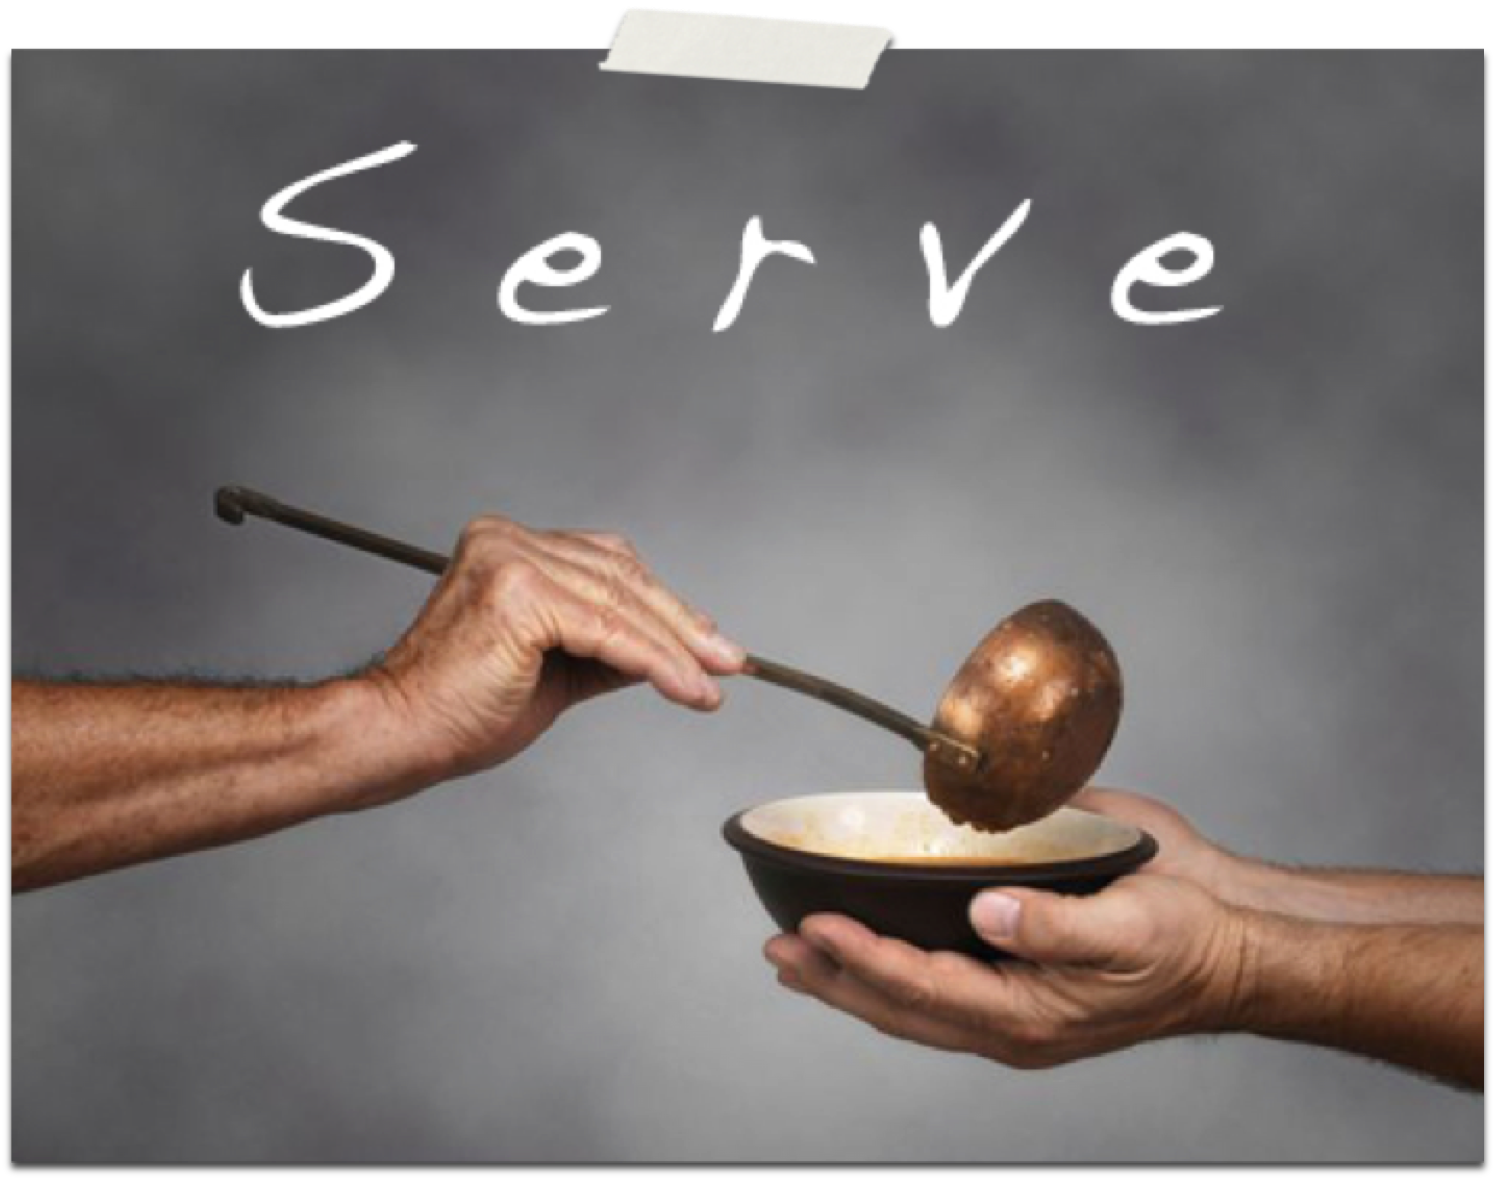 A New Paradigm on Serving - Daniel Im